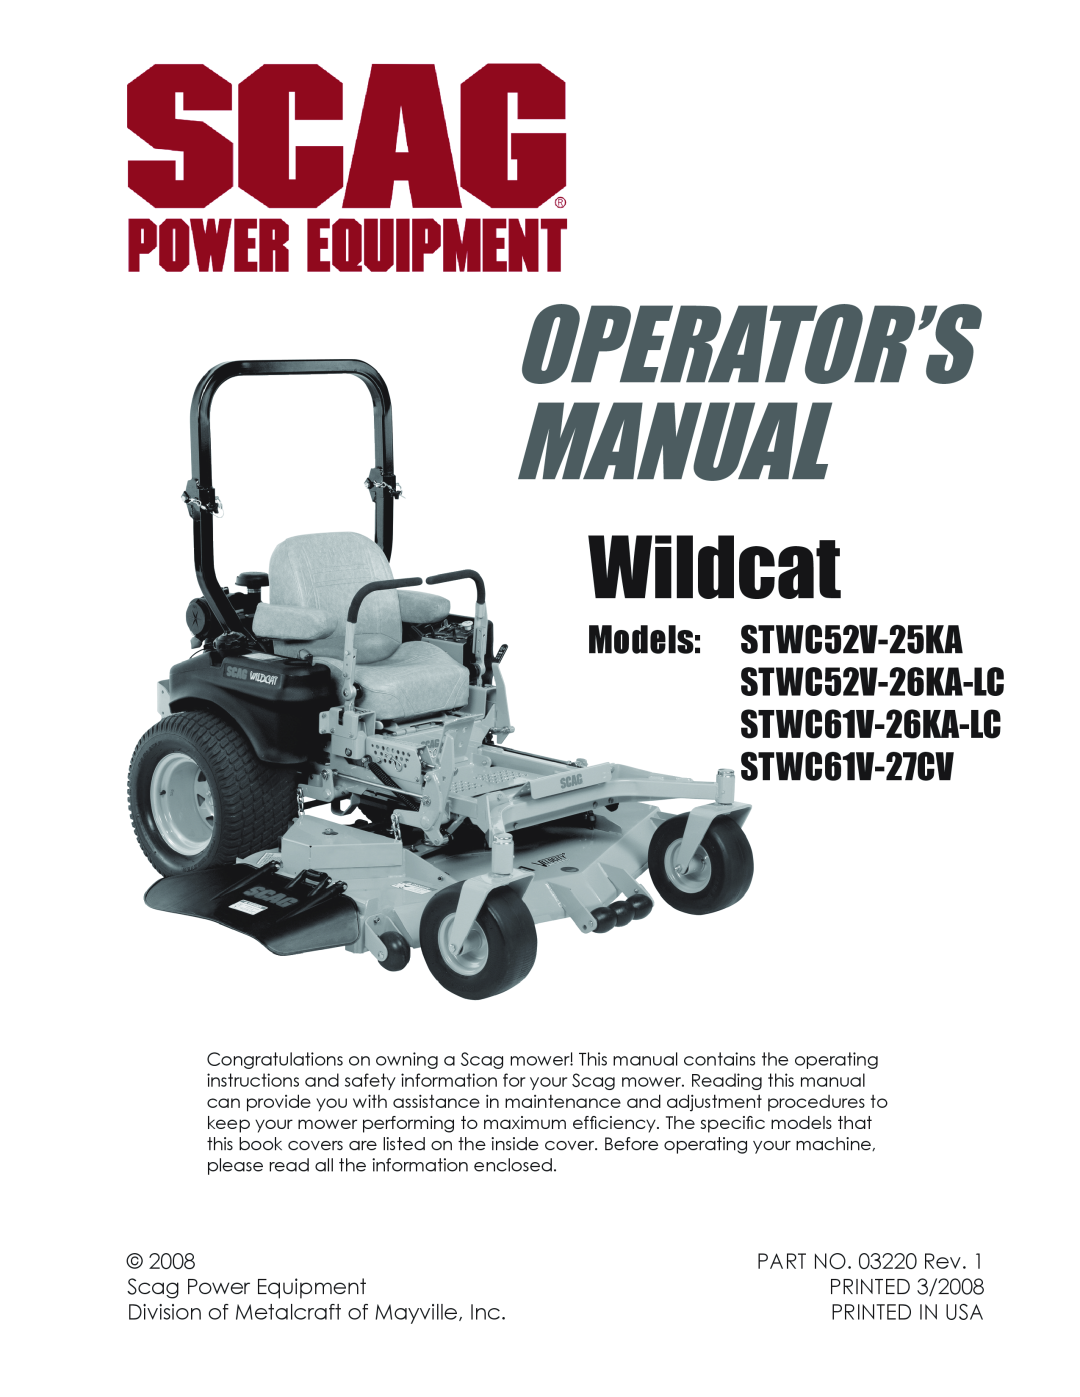 Scag Power Equipment STWC61V-26KA-LC manual Operator’S Manual, Wildcat, 2008, PART NO. 03220 Rev, Scag Power Equipment 